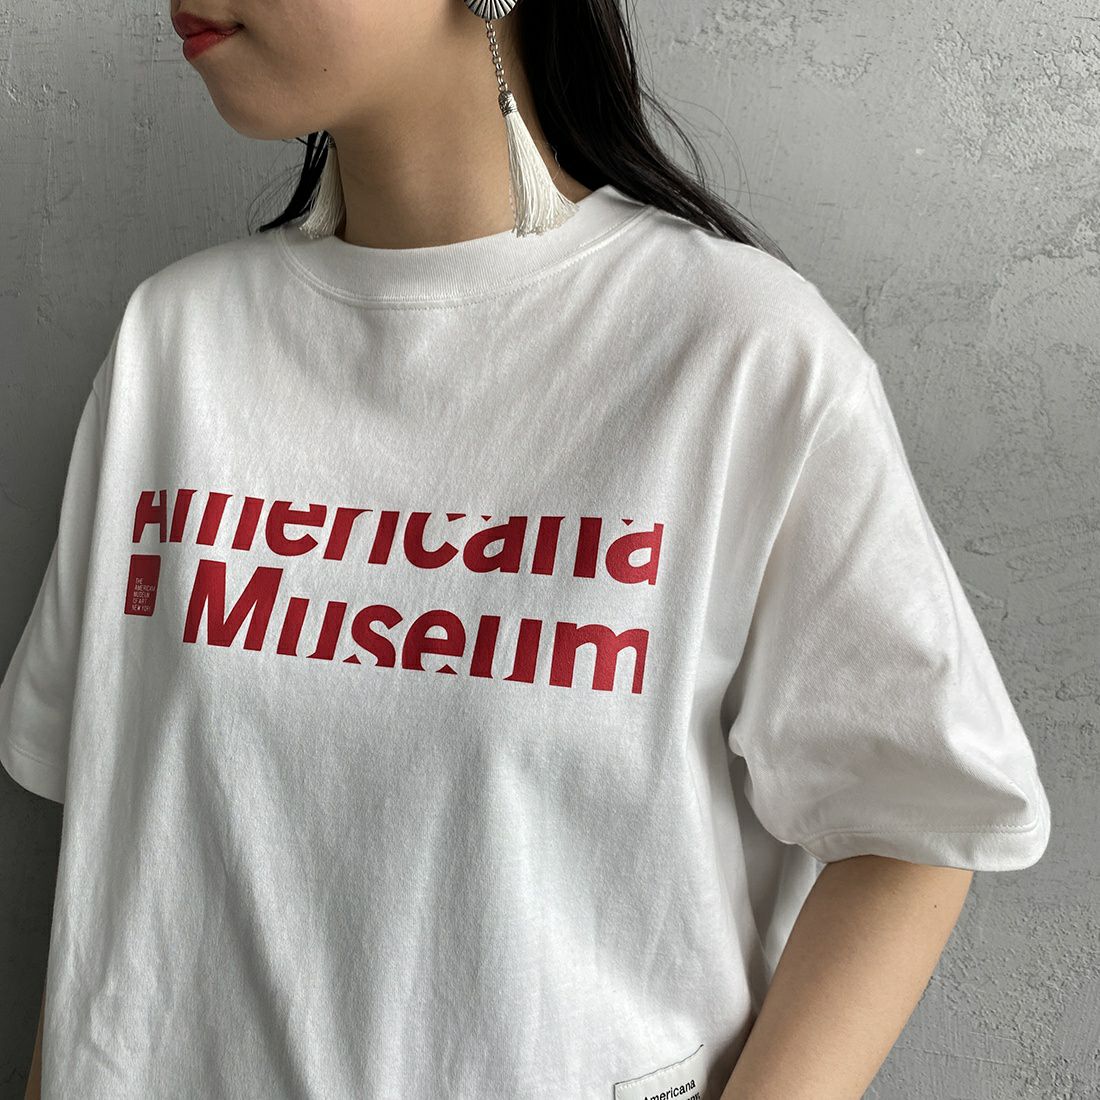 Americana × JEANS FACTORY [アメリカーナ × ジーンズファクトリー] 別注 クロップドワイドプリントTシャツ [ASO-M-649-2-JF] ｵﾌﾎﾜｲﾄ